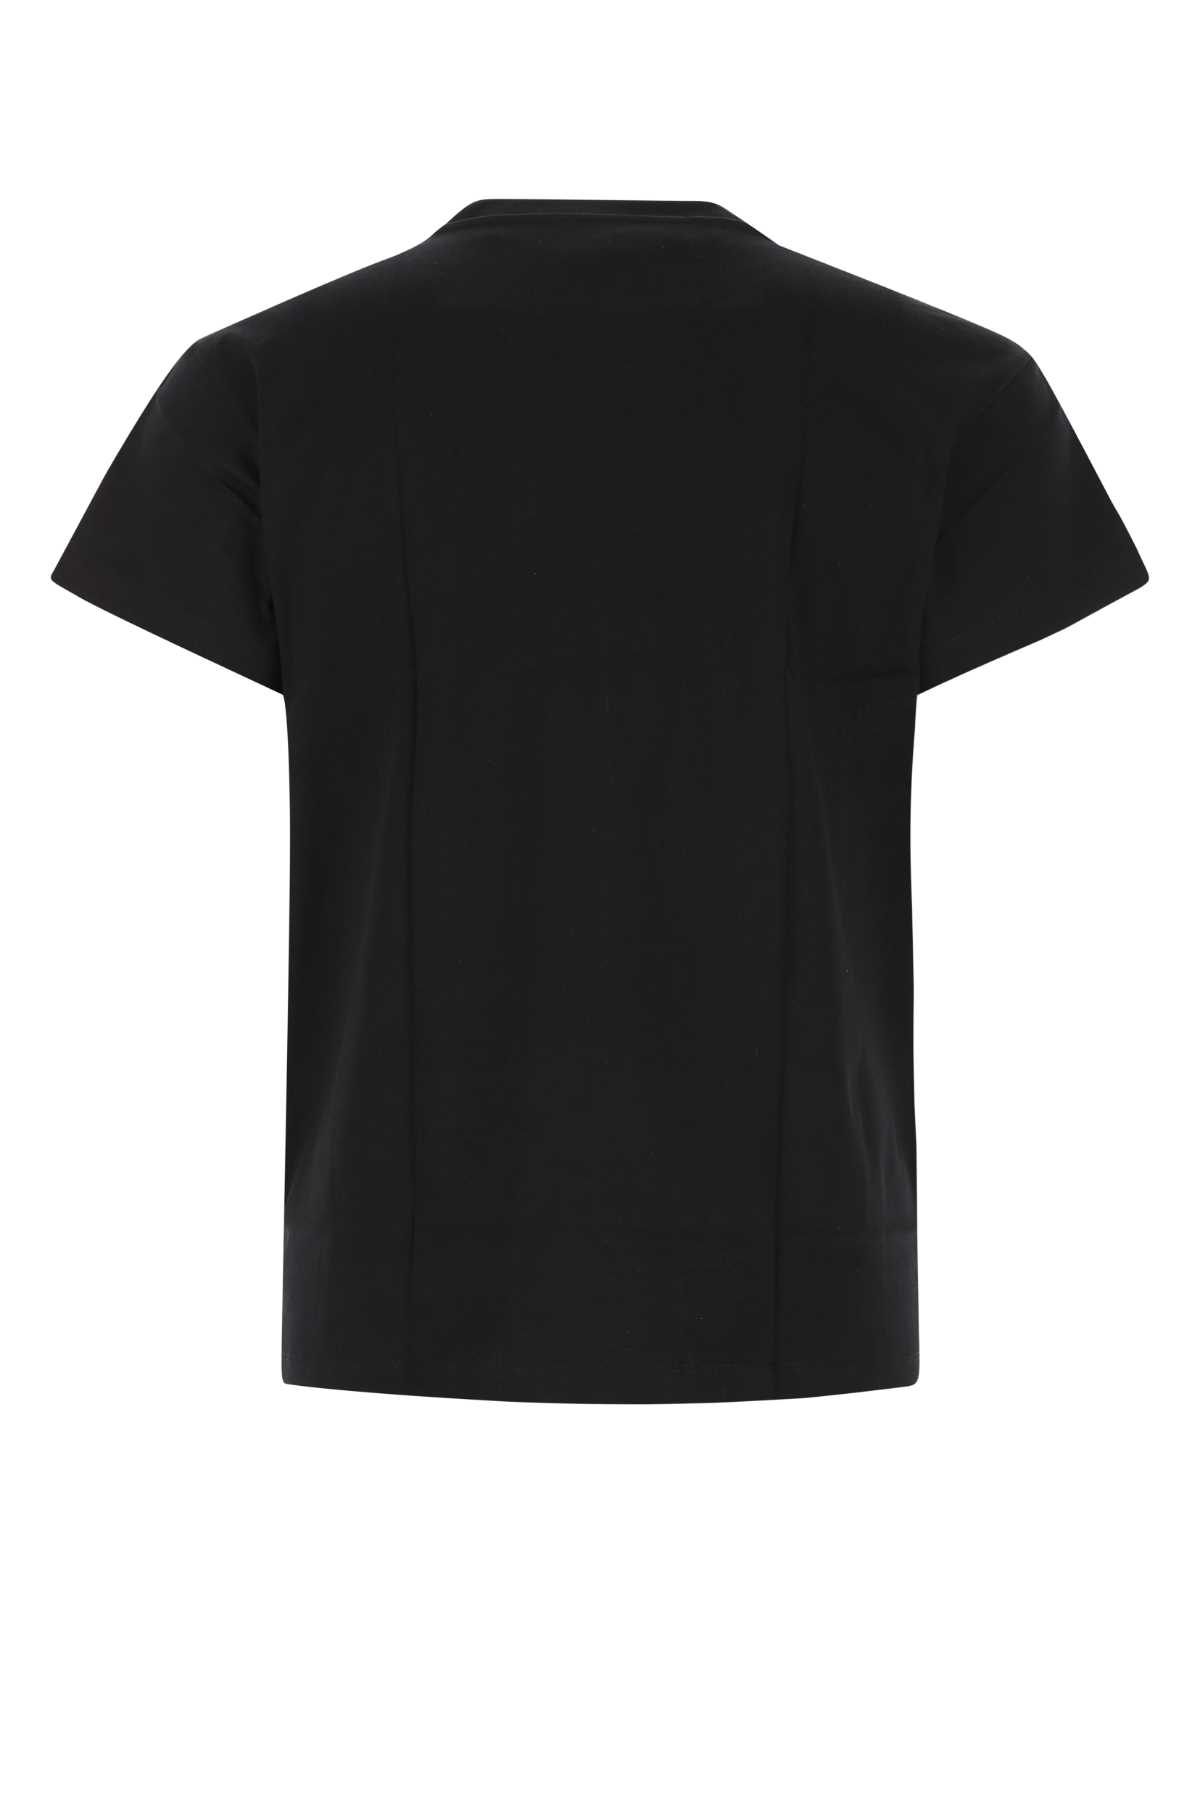 Jil Sander Black Cotton T-shirt Set In 001